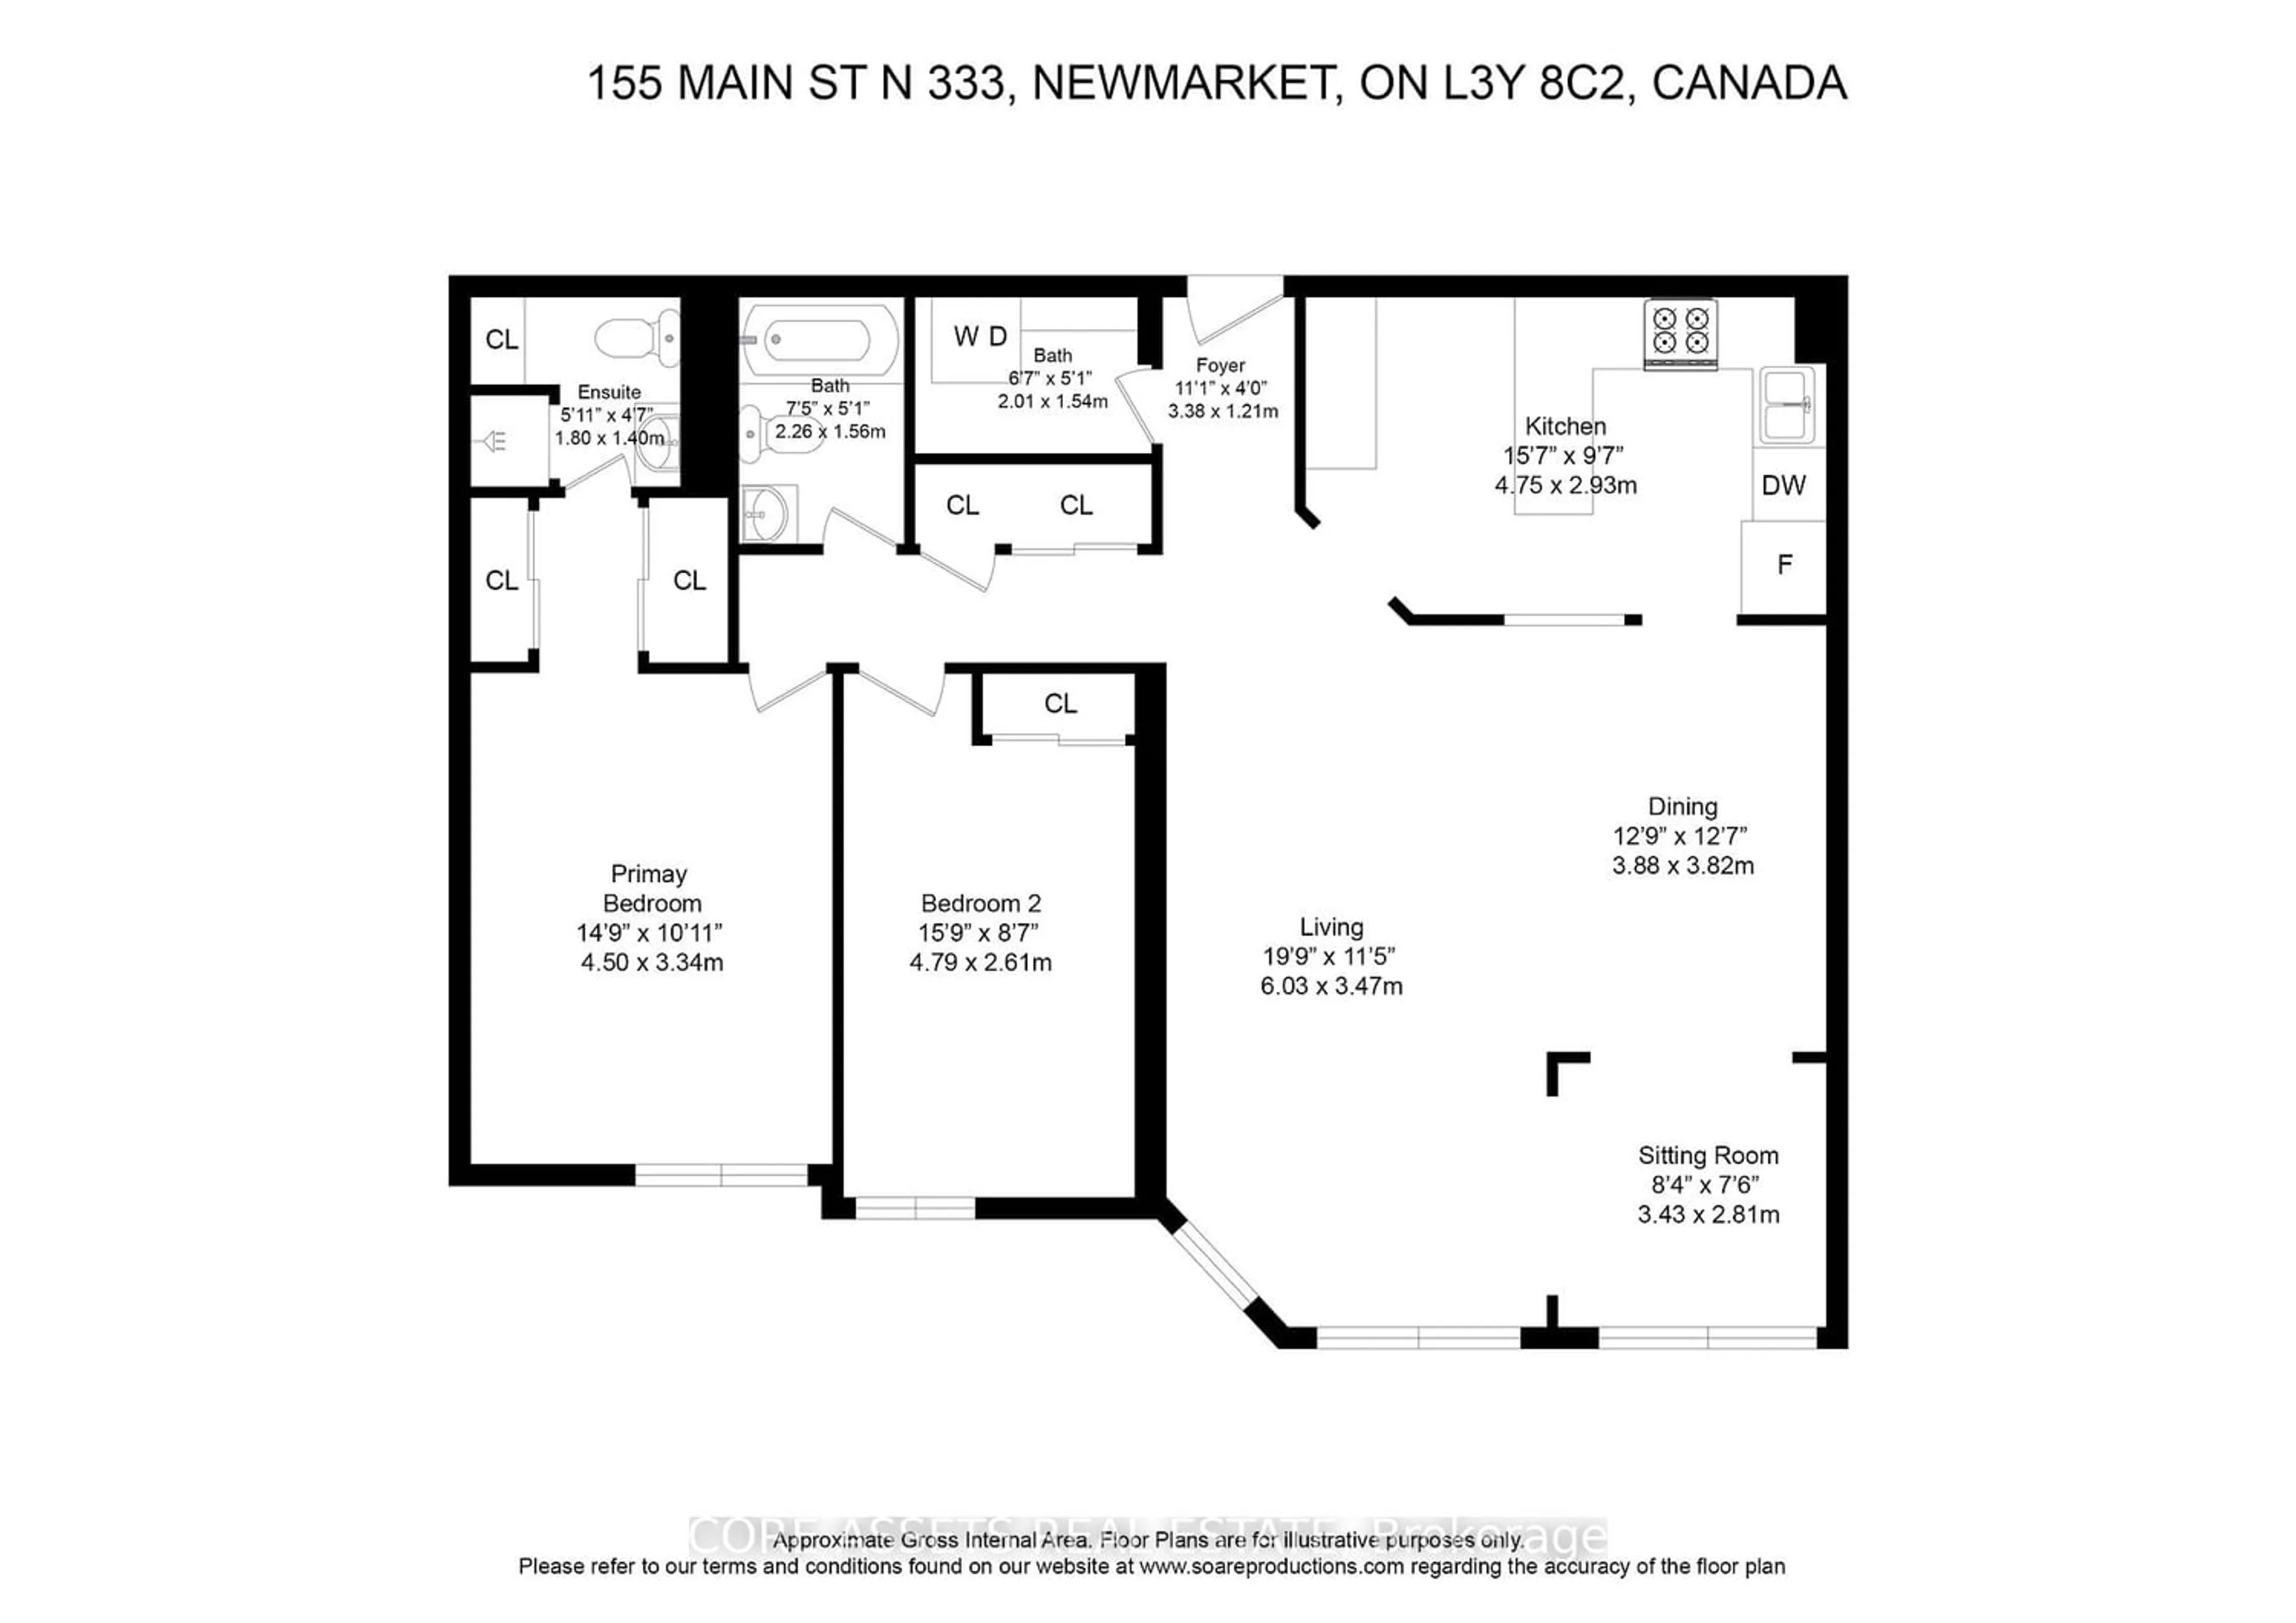 Floor plan for 155 Main St #333, Newmarket Ontario L3Y 8C2